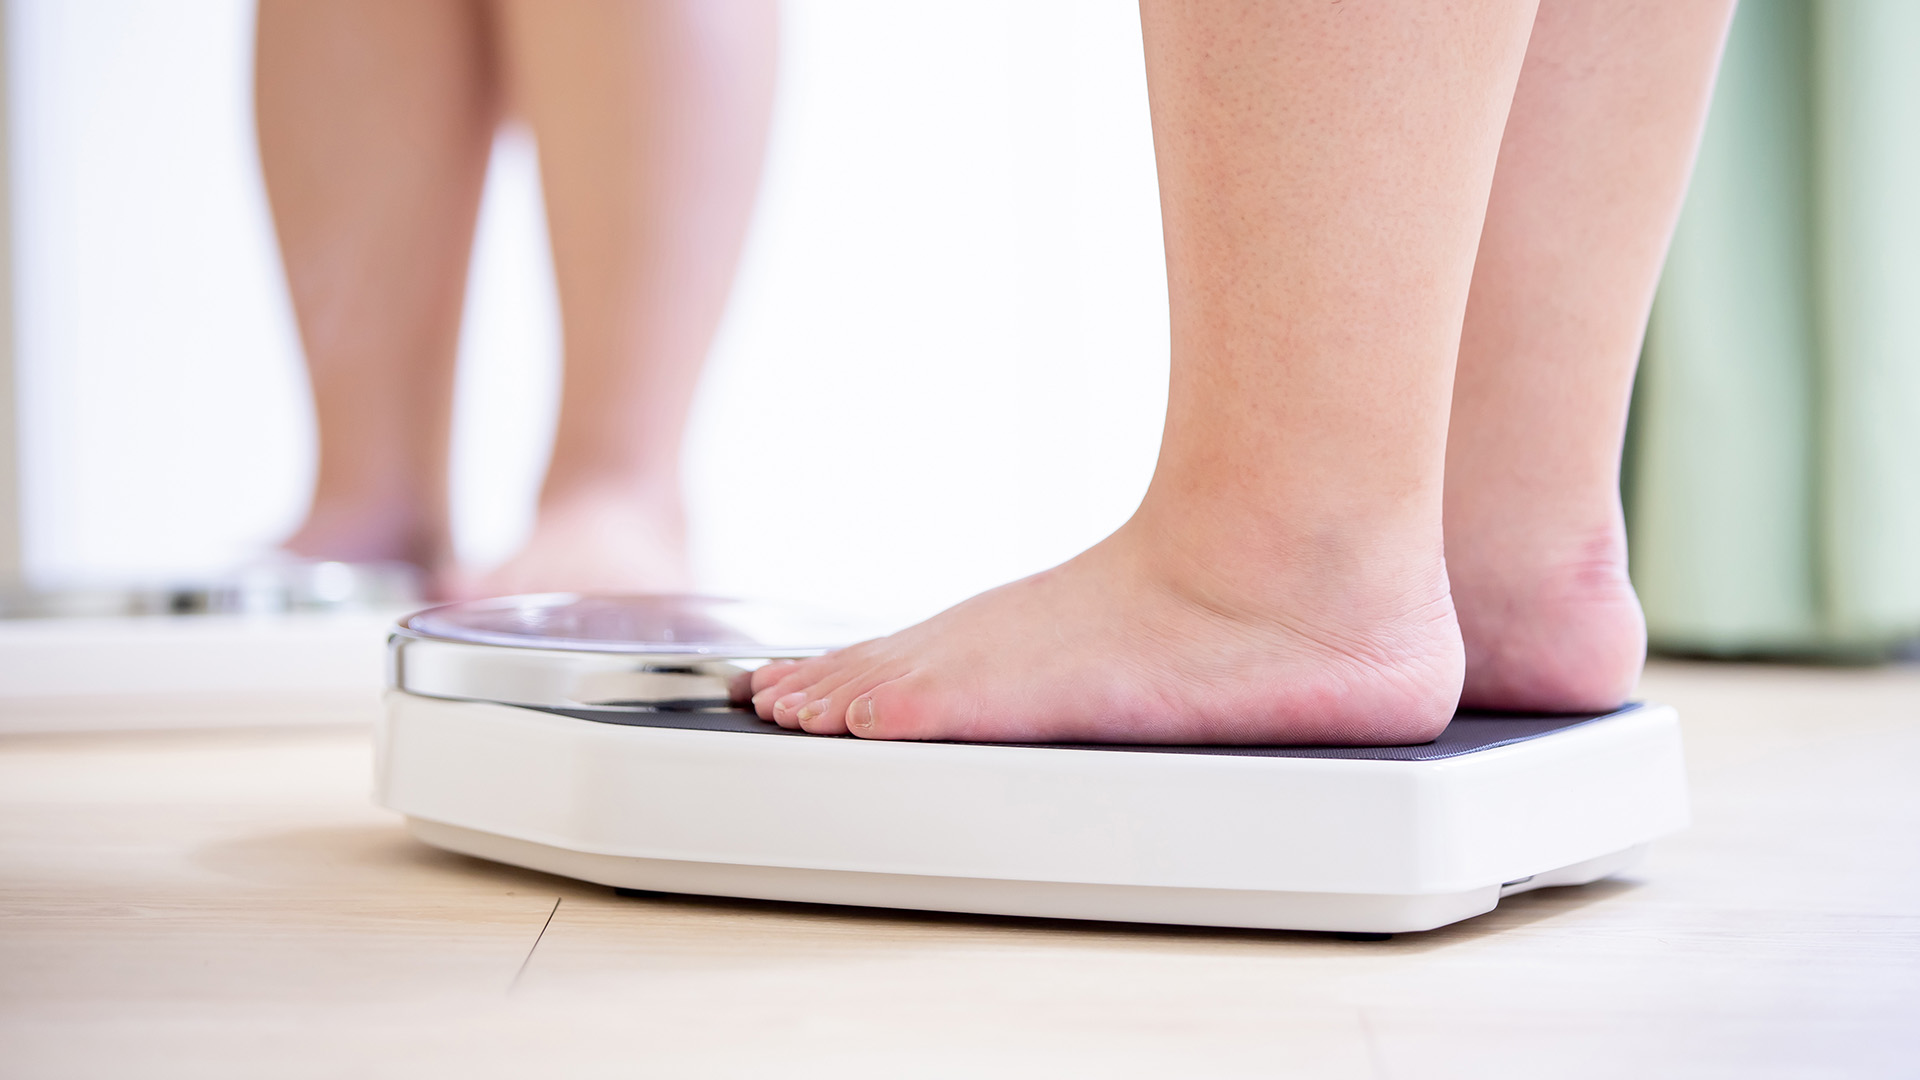 Reversing Type 2 Diabetes Through Weight Loss